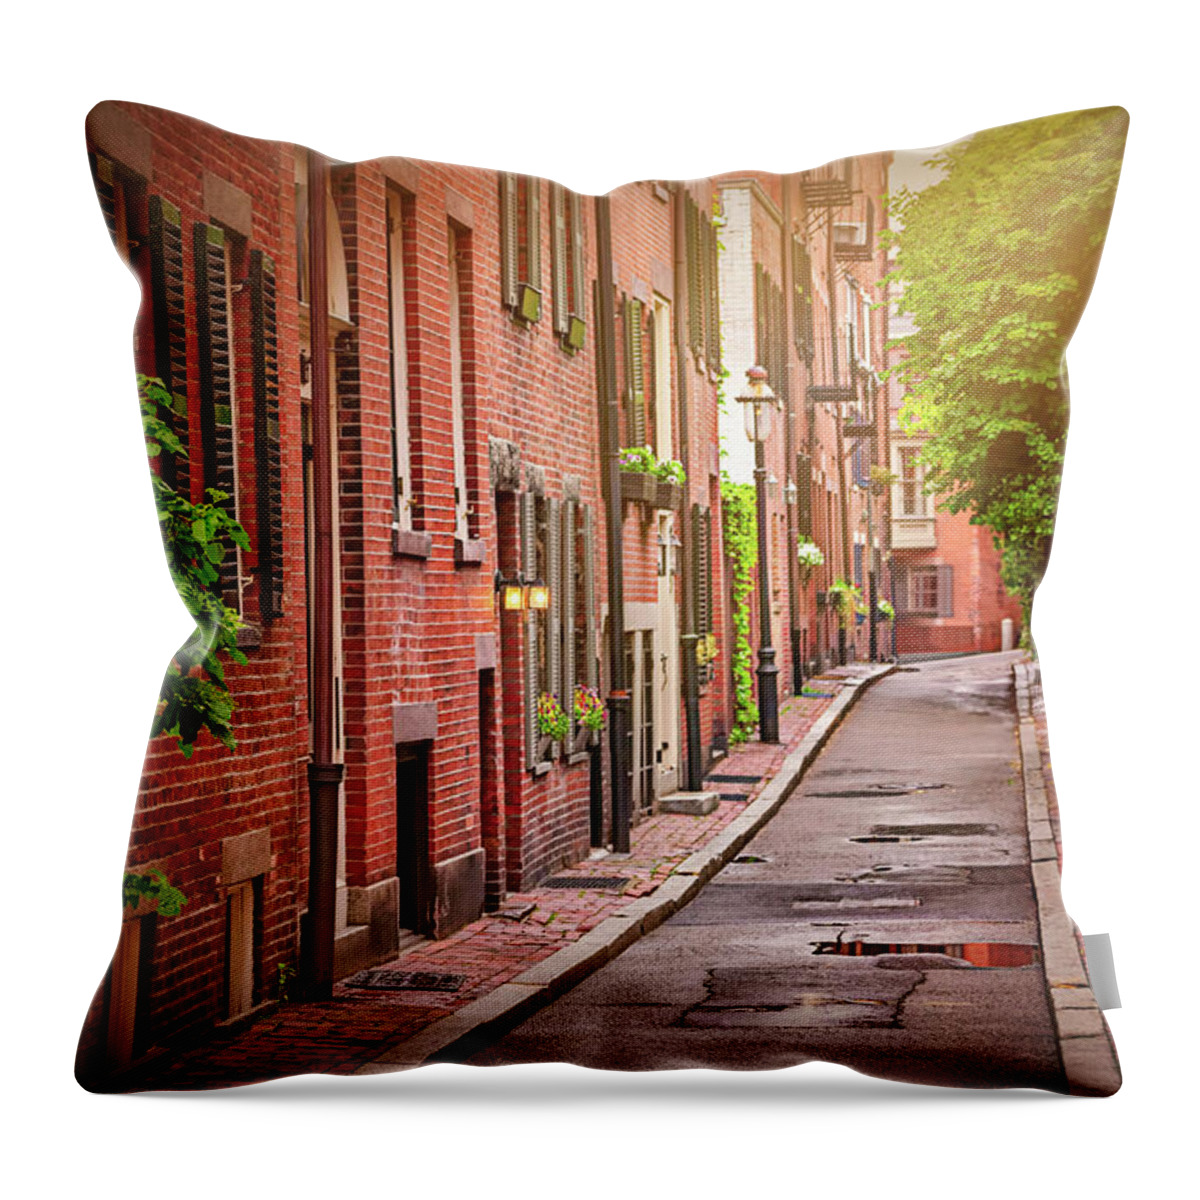 Beacon Hill Throw Pillow featuring the photograph Beacon Hill Boston by Carol Japp